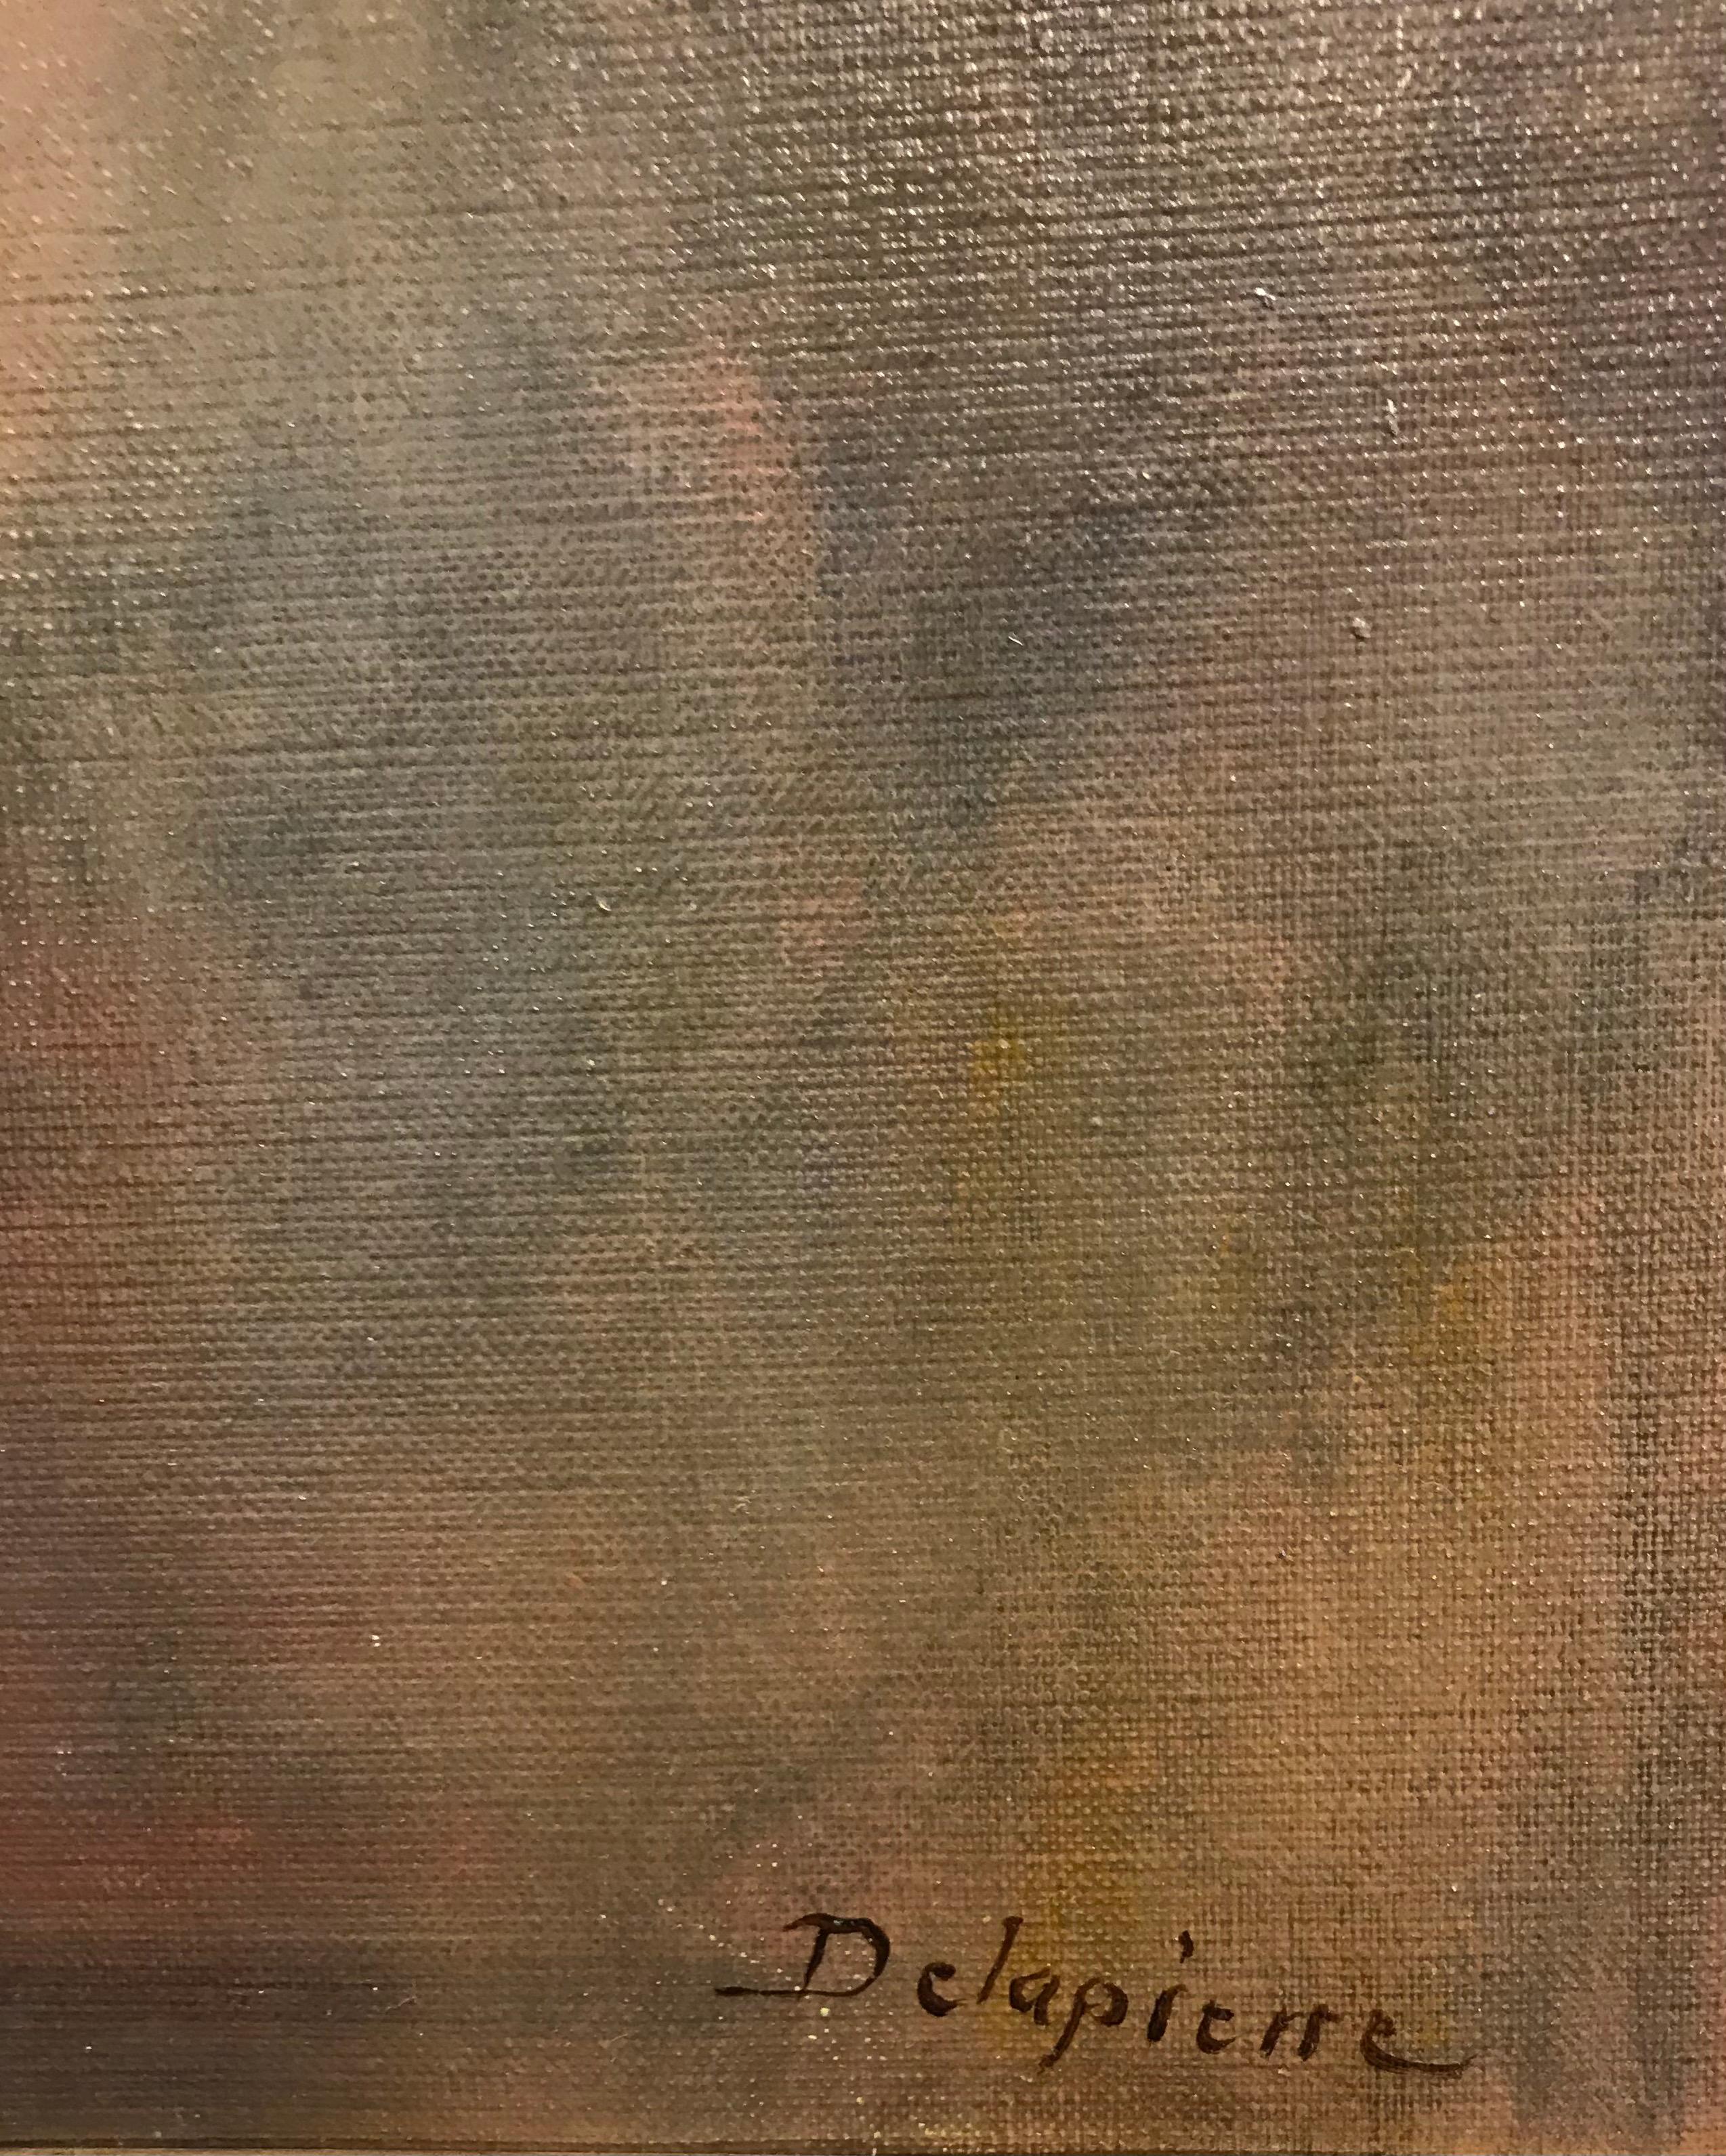 Dahlias by Roger Delapierre - Oil on canvas 46x55 cm For Sale 1